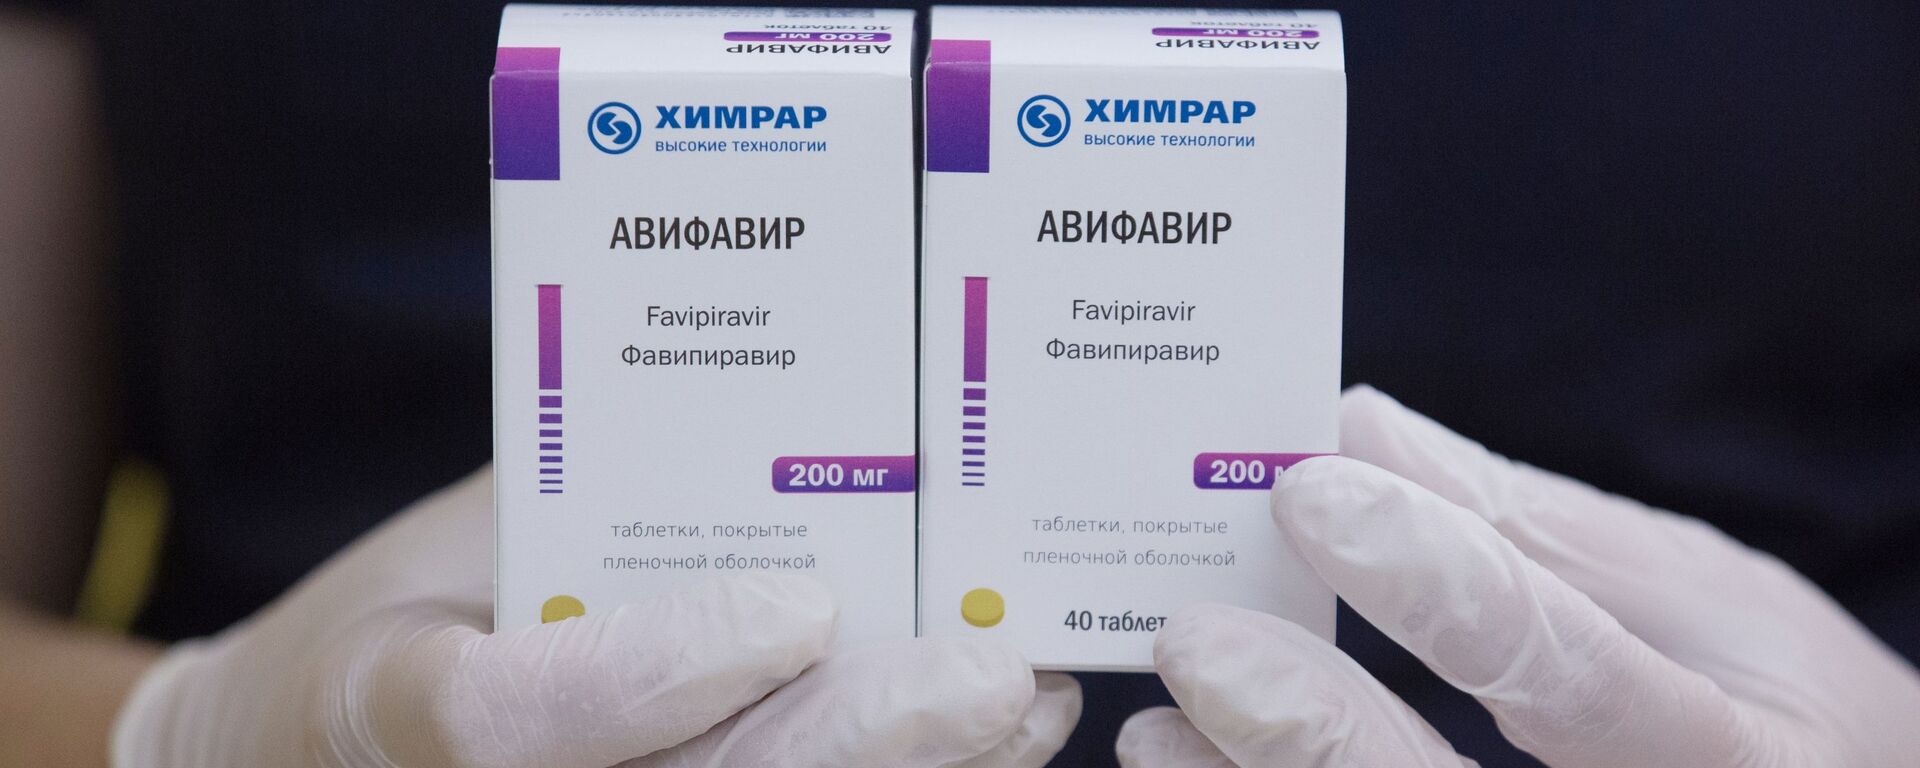 Avifavir, medicamento producido en Rusia para combatir el coronavirus - Sputnik Mundo, 1920, 01.02.2021